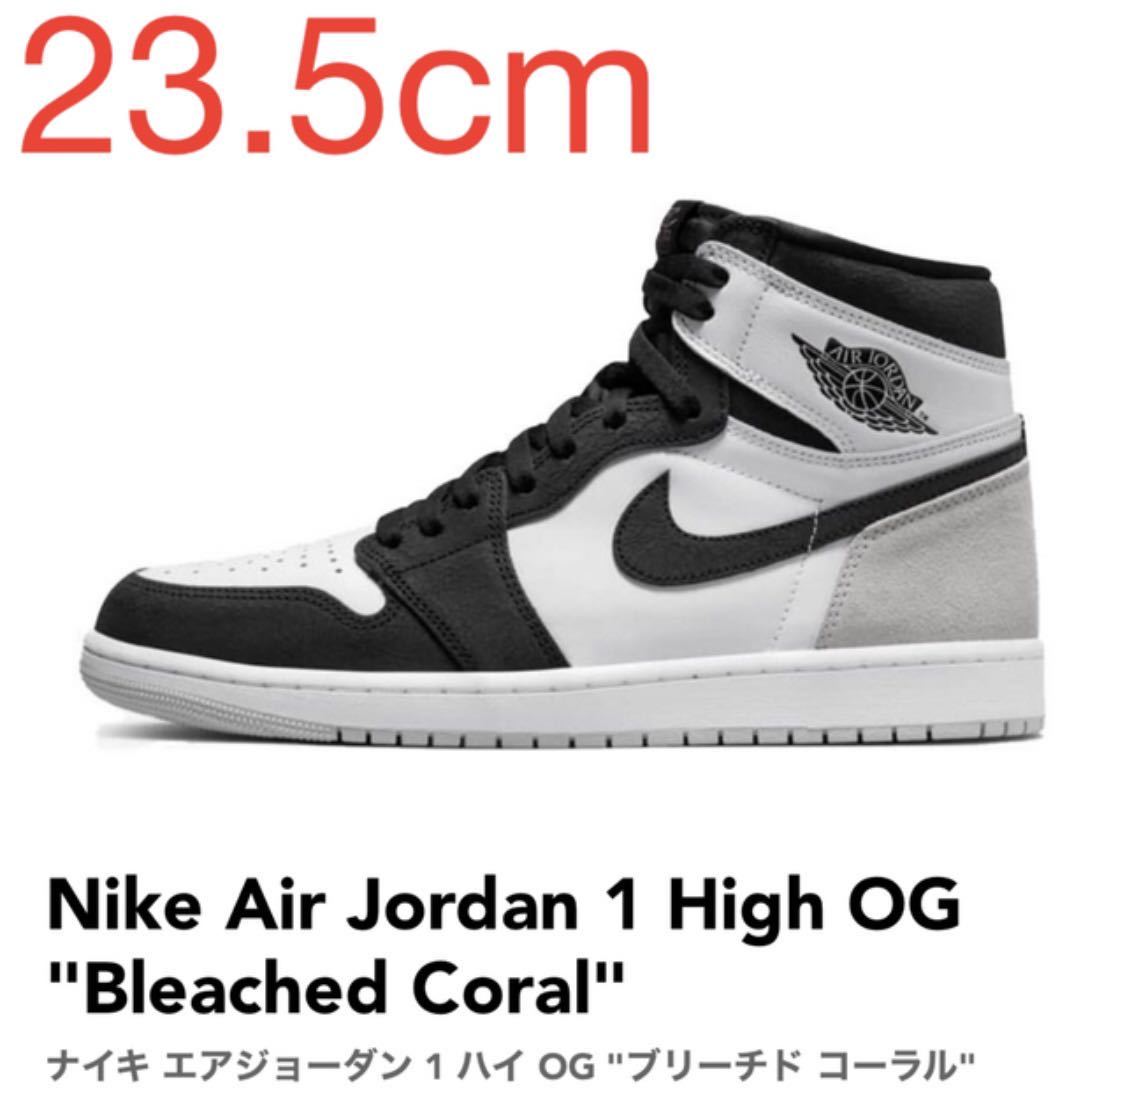 Nike Air Jordan 1 High OG Bleached Coral ナイキ エアジョーダン 1 ハイ OG ブリーチド コーラル 555088-108 23.5cm US5 新品